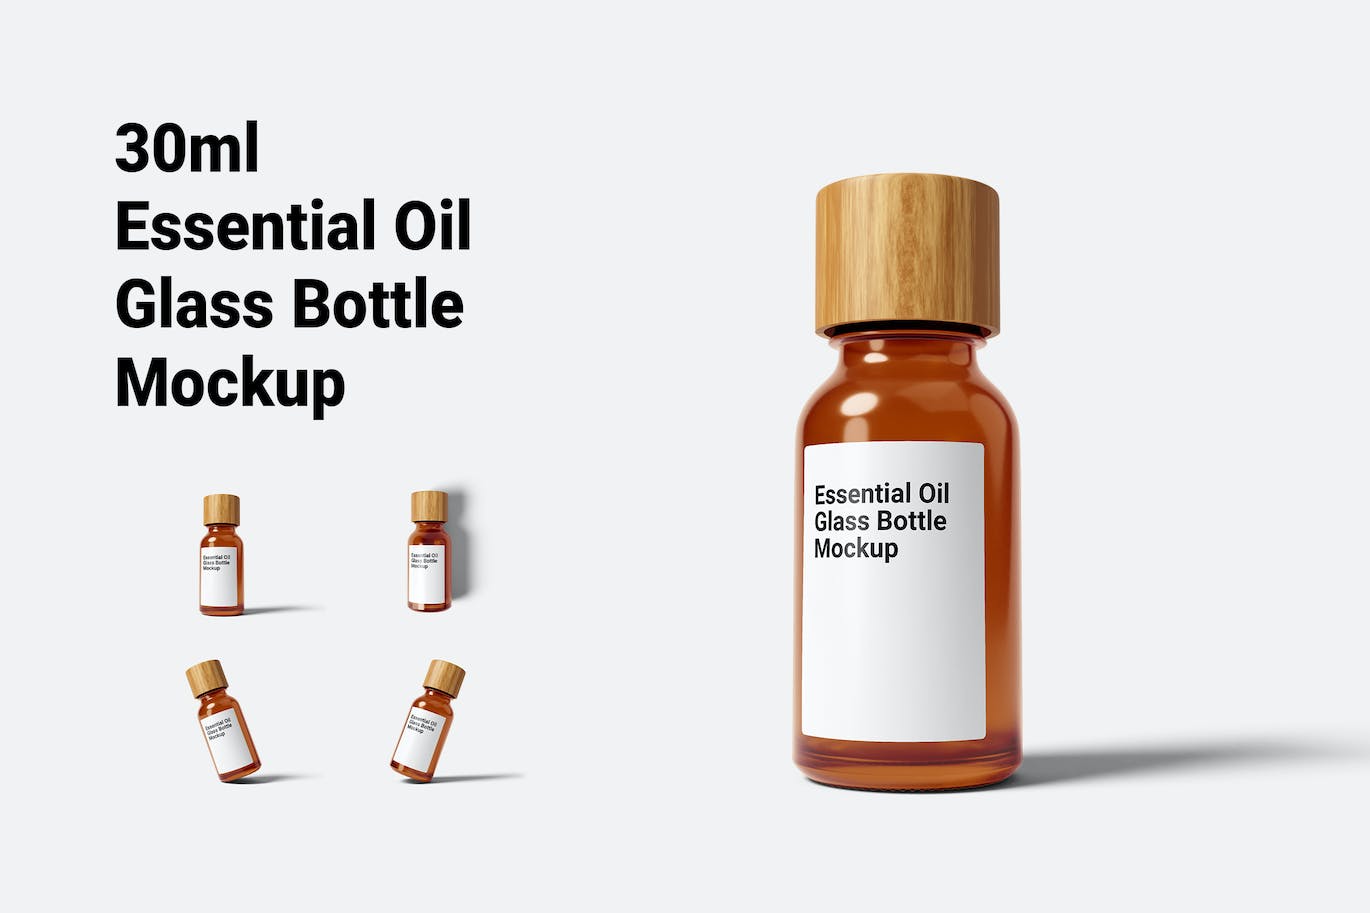 30ml精油玻璃瓶包装设计样机 30ml Essential Oil Glass Bottle Mockup 样机素材 第1张